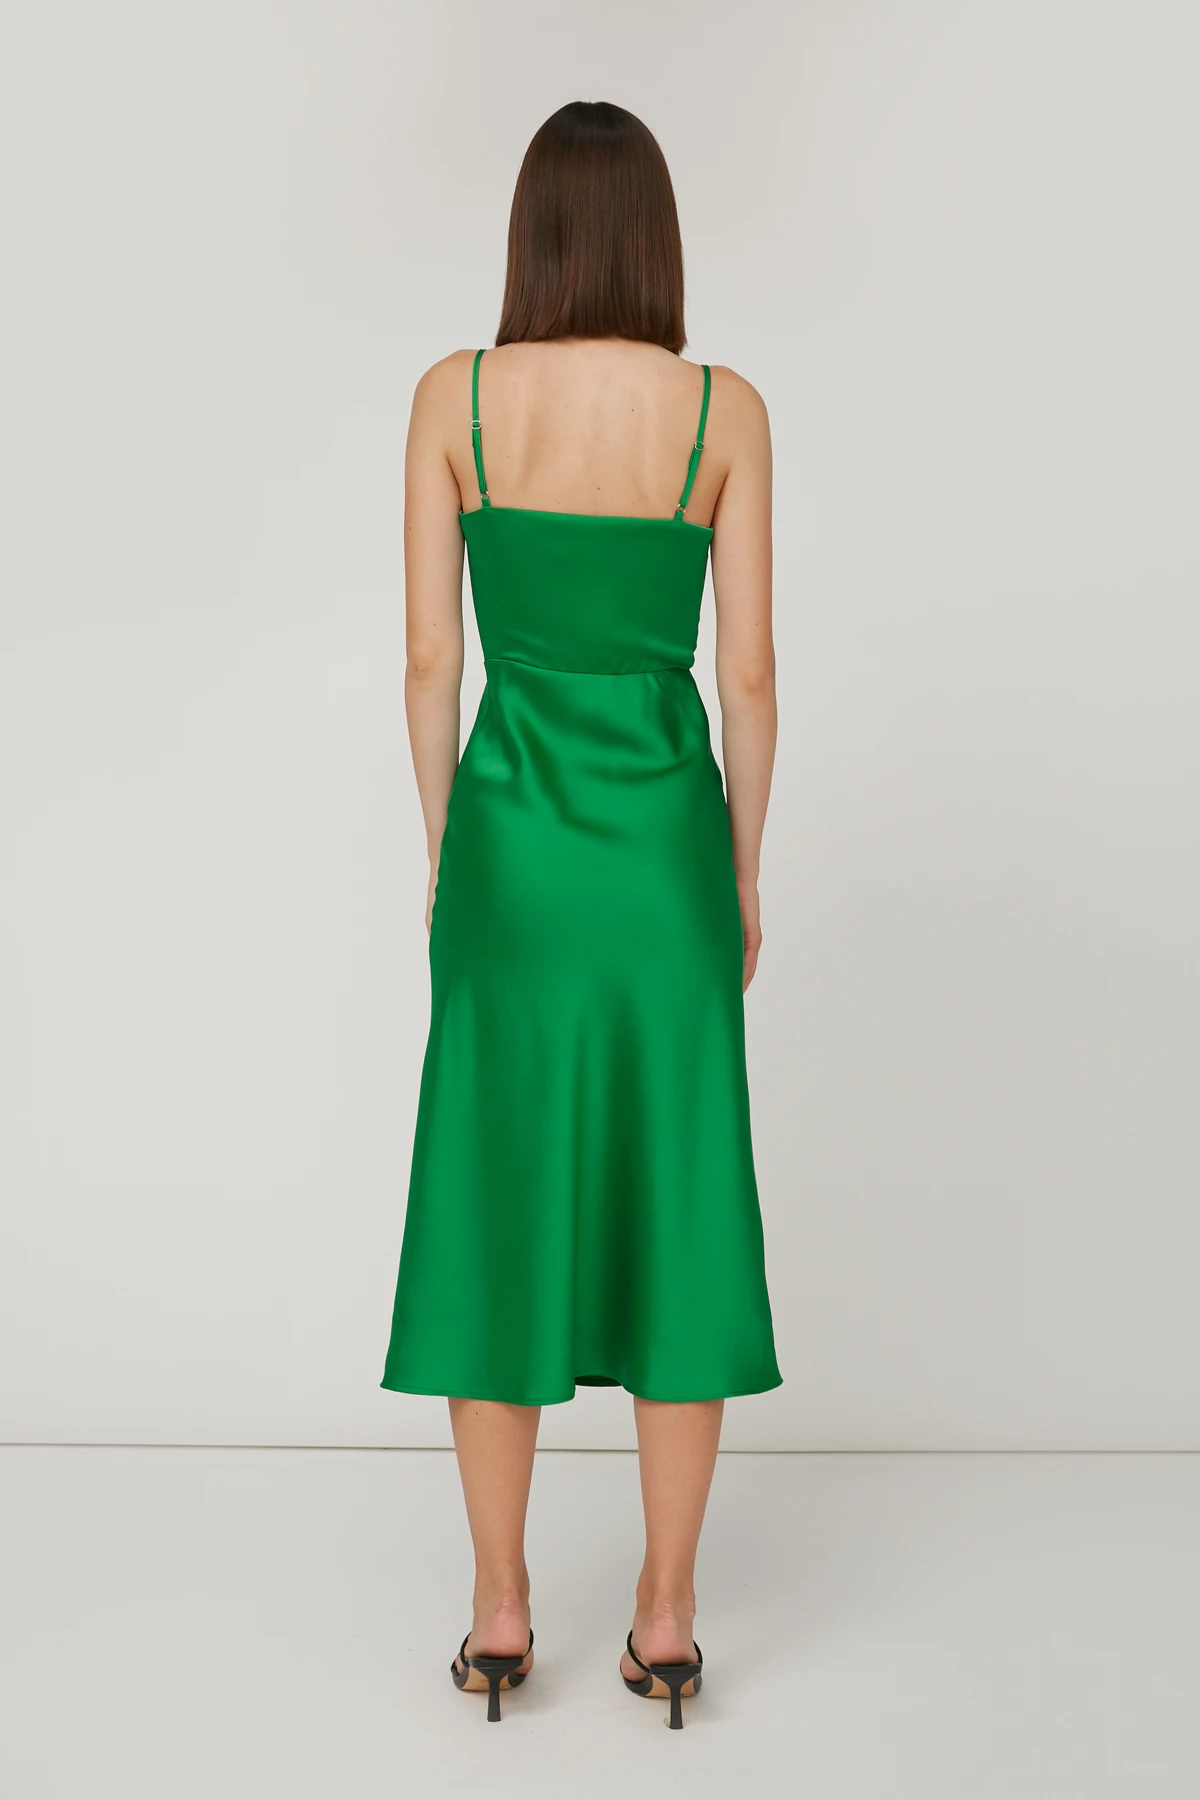 Bright green satin slip dress, photo 4